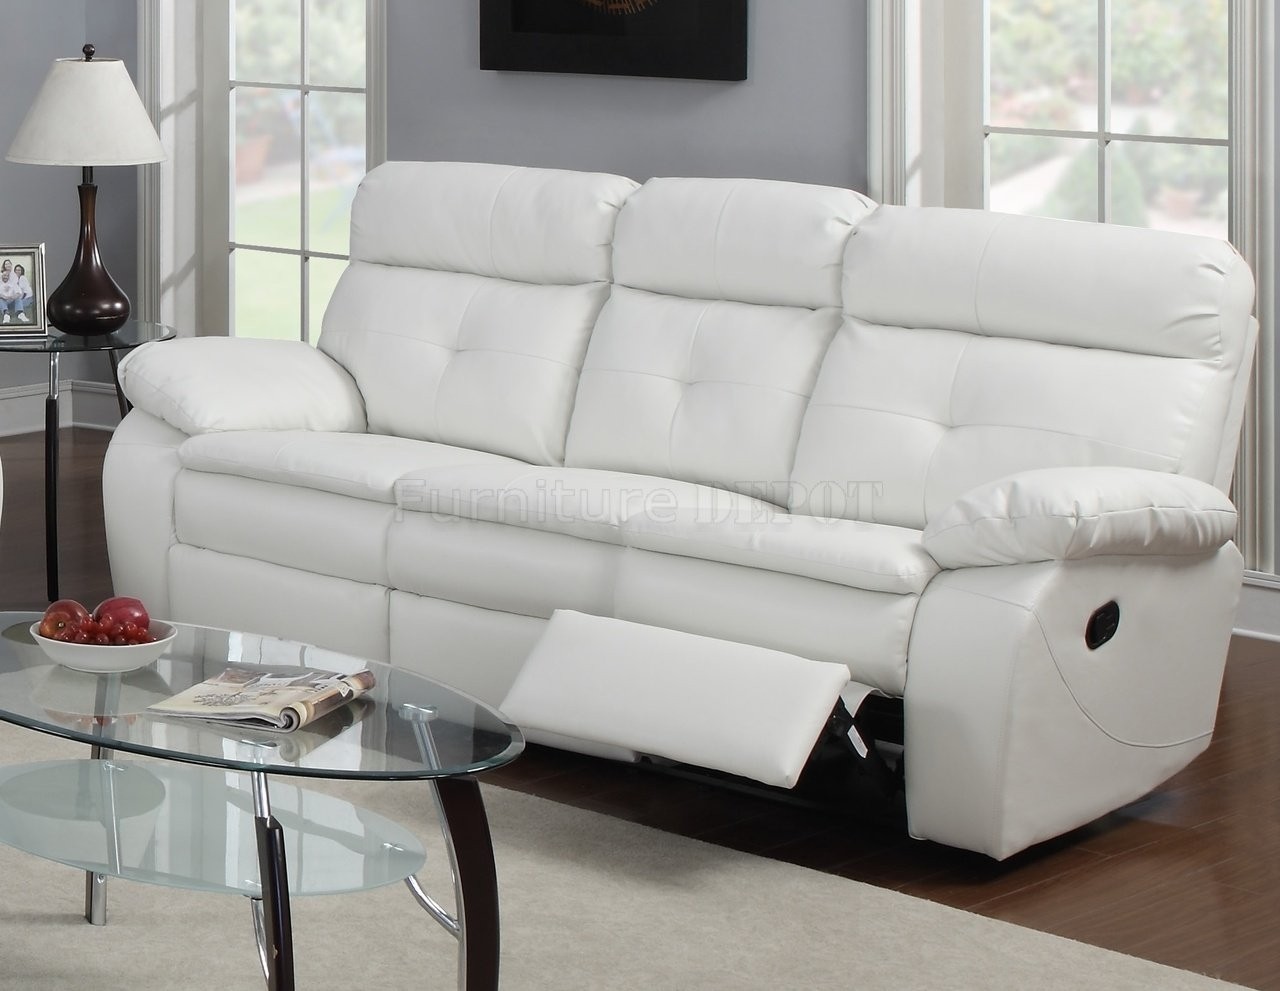 White leather reclining sofa 3